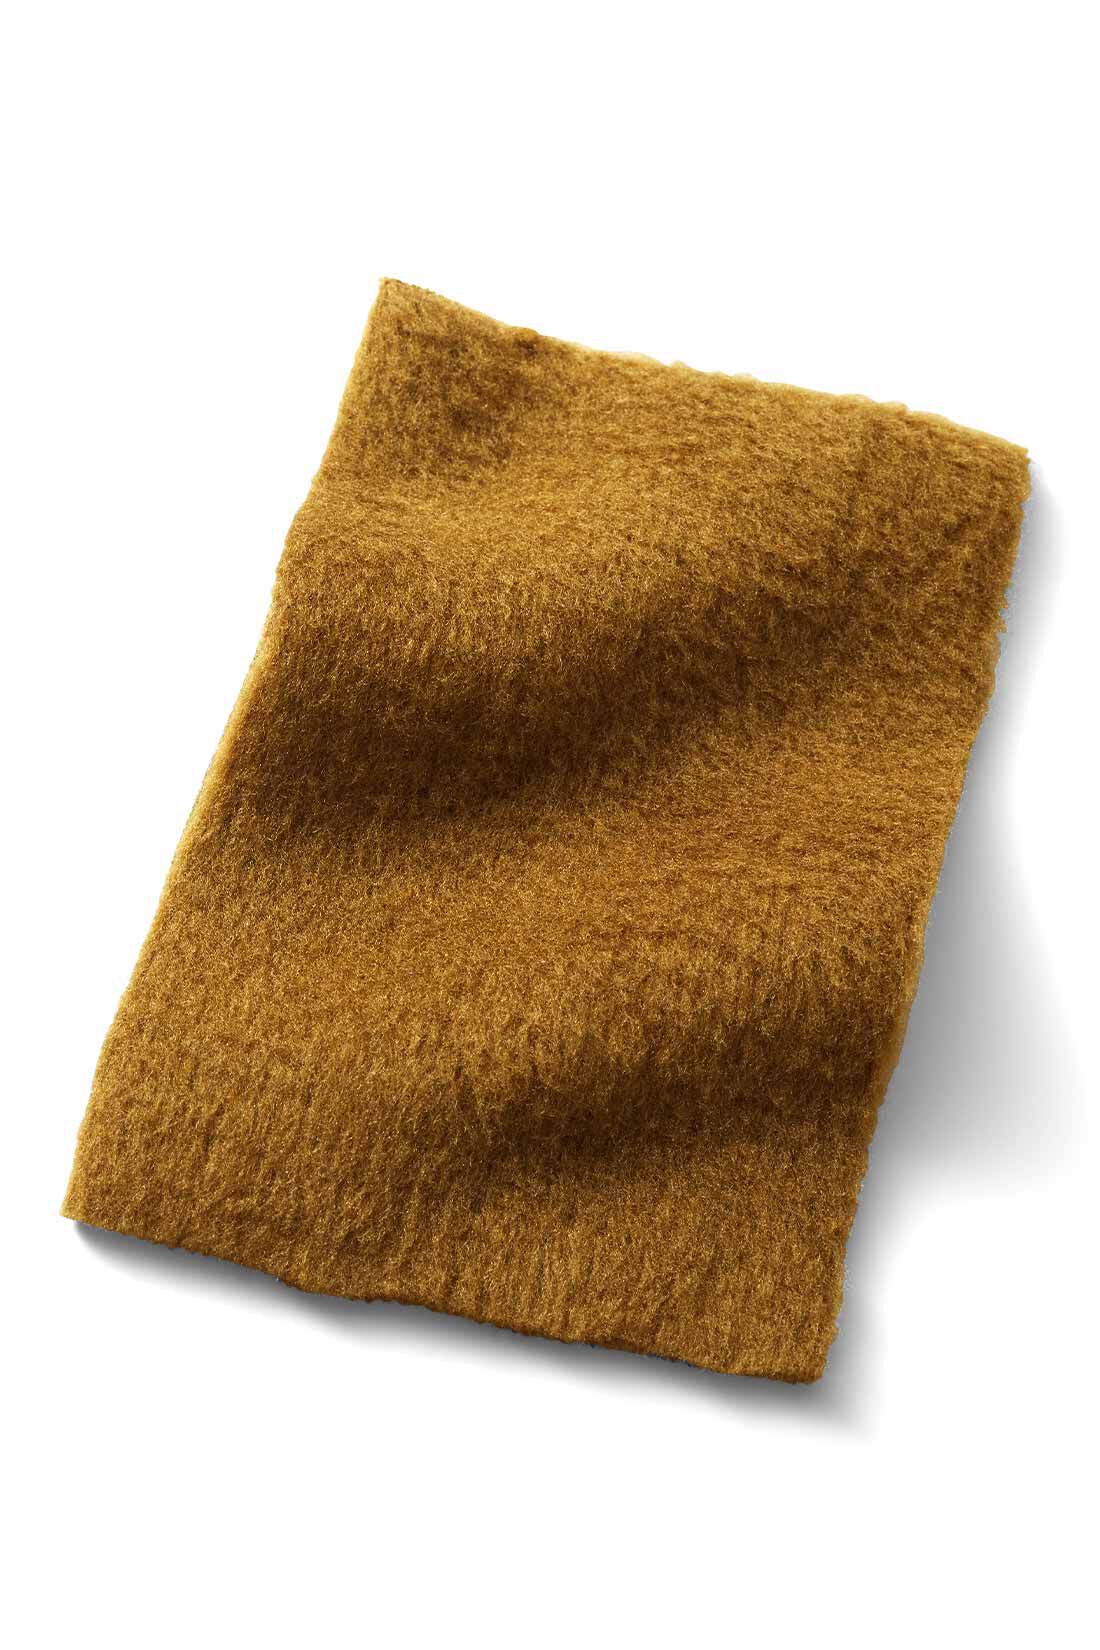 Real Stock|MEDE19F　やわらかフリースのミリタリープルオーバー〈カーキ〉|少し長めの毛足が滑らかであたたかい、やや厚みのあるフリース素材。別布はコントラストを生むポリエステル素材。